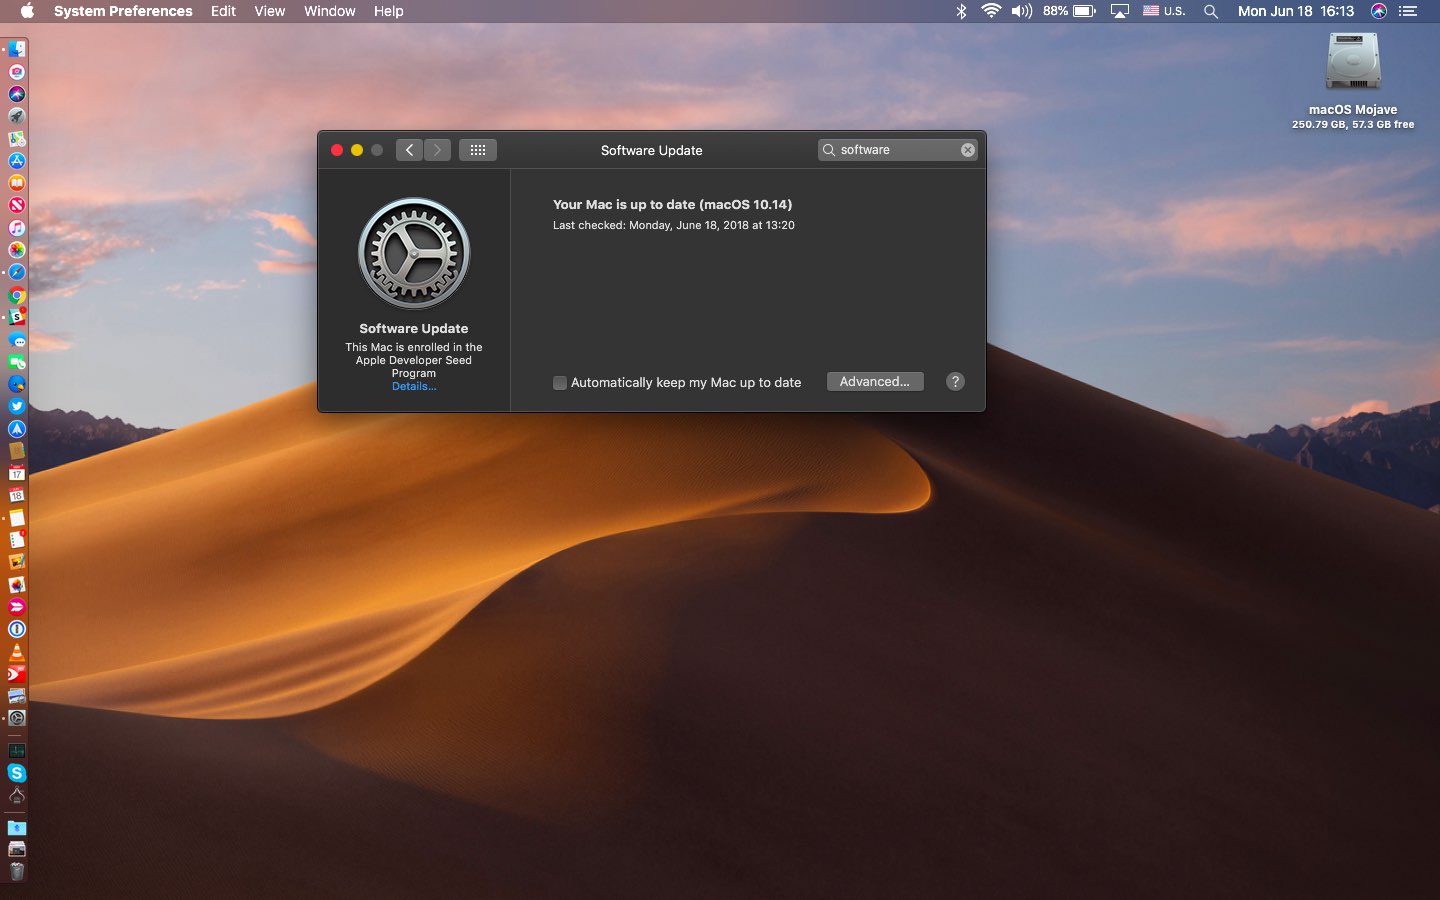 The Mac Software Update window on macOS Mojave